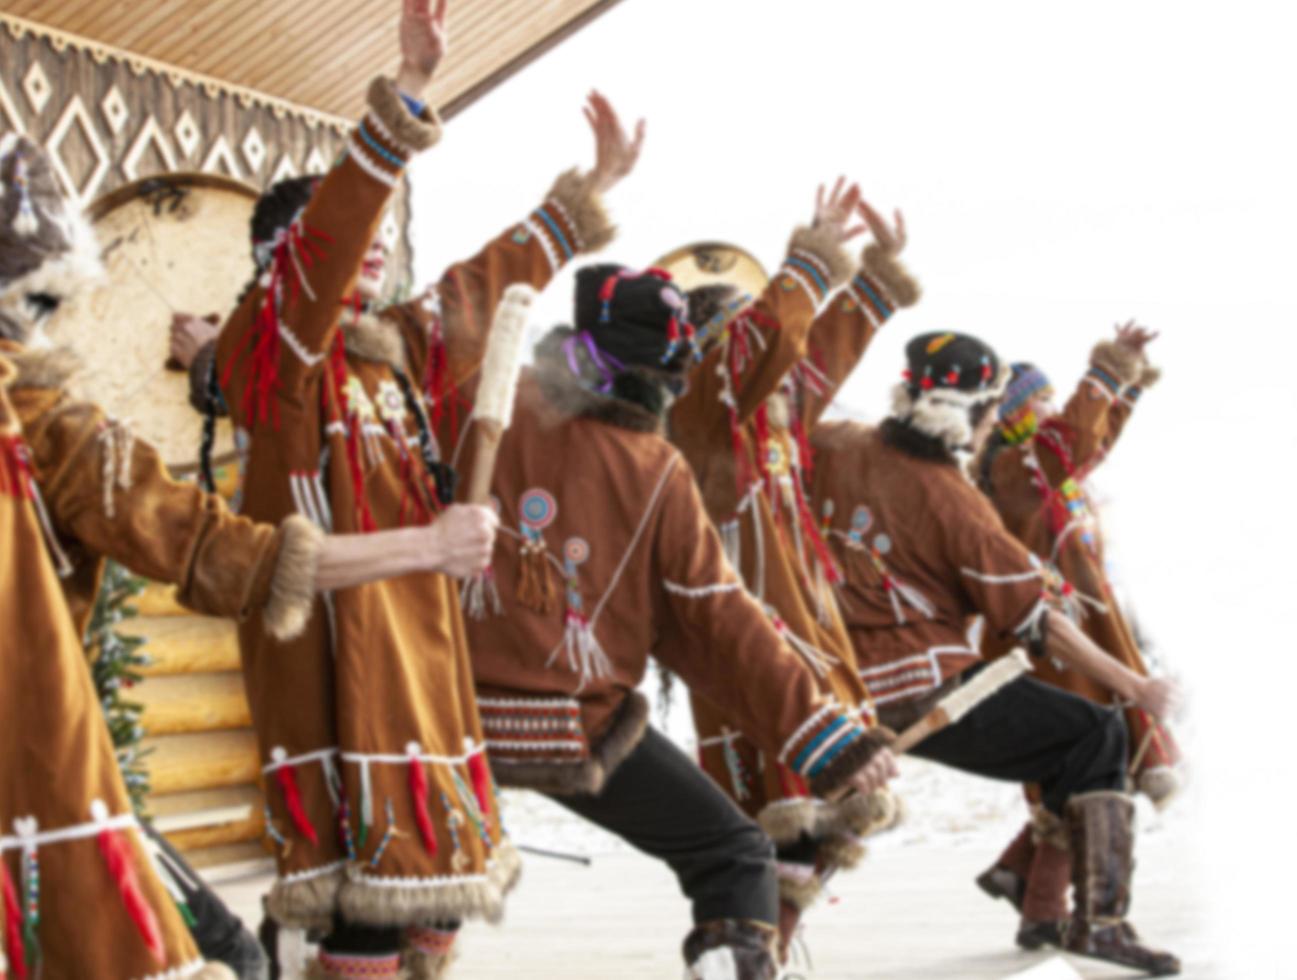 kamchatka, rússia - 16 de julho de 2022- performance de conjunto folclórico de imagem borrada em trajes indígenas de kamchatka. foto